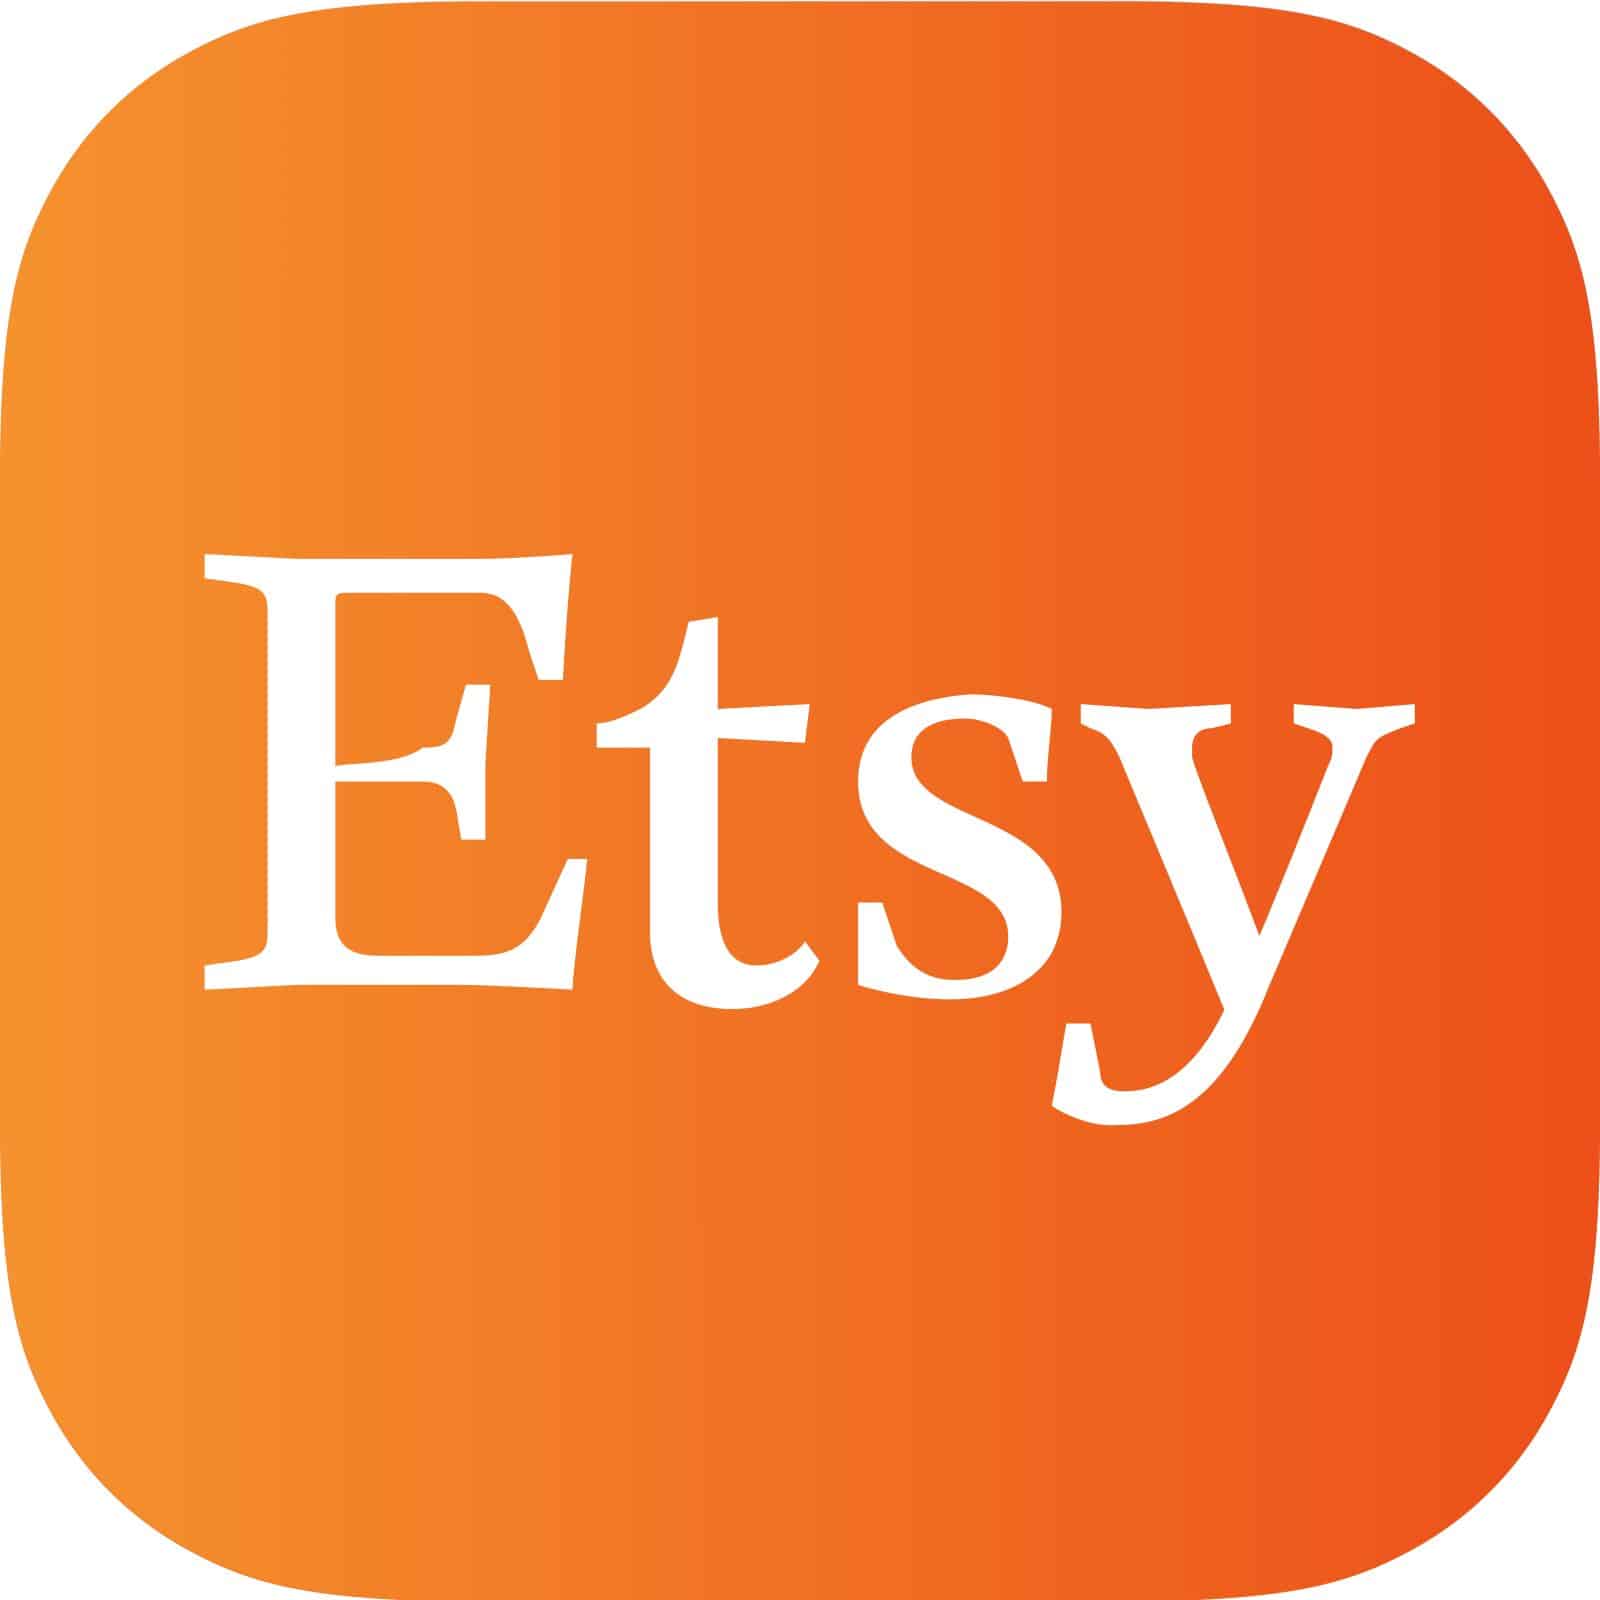 Etsy integration logo icon